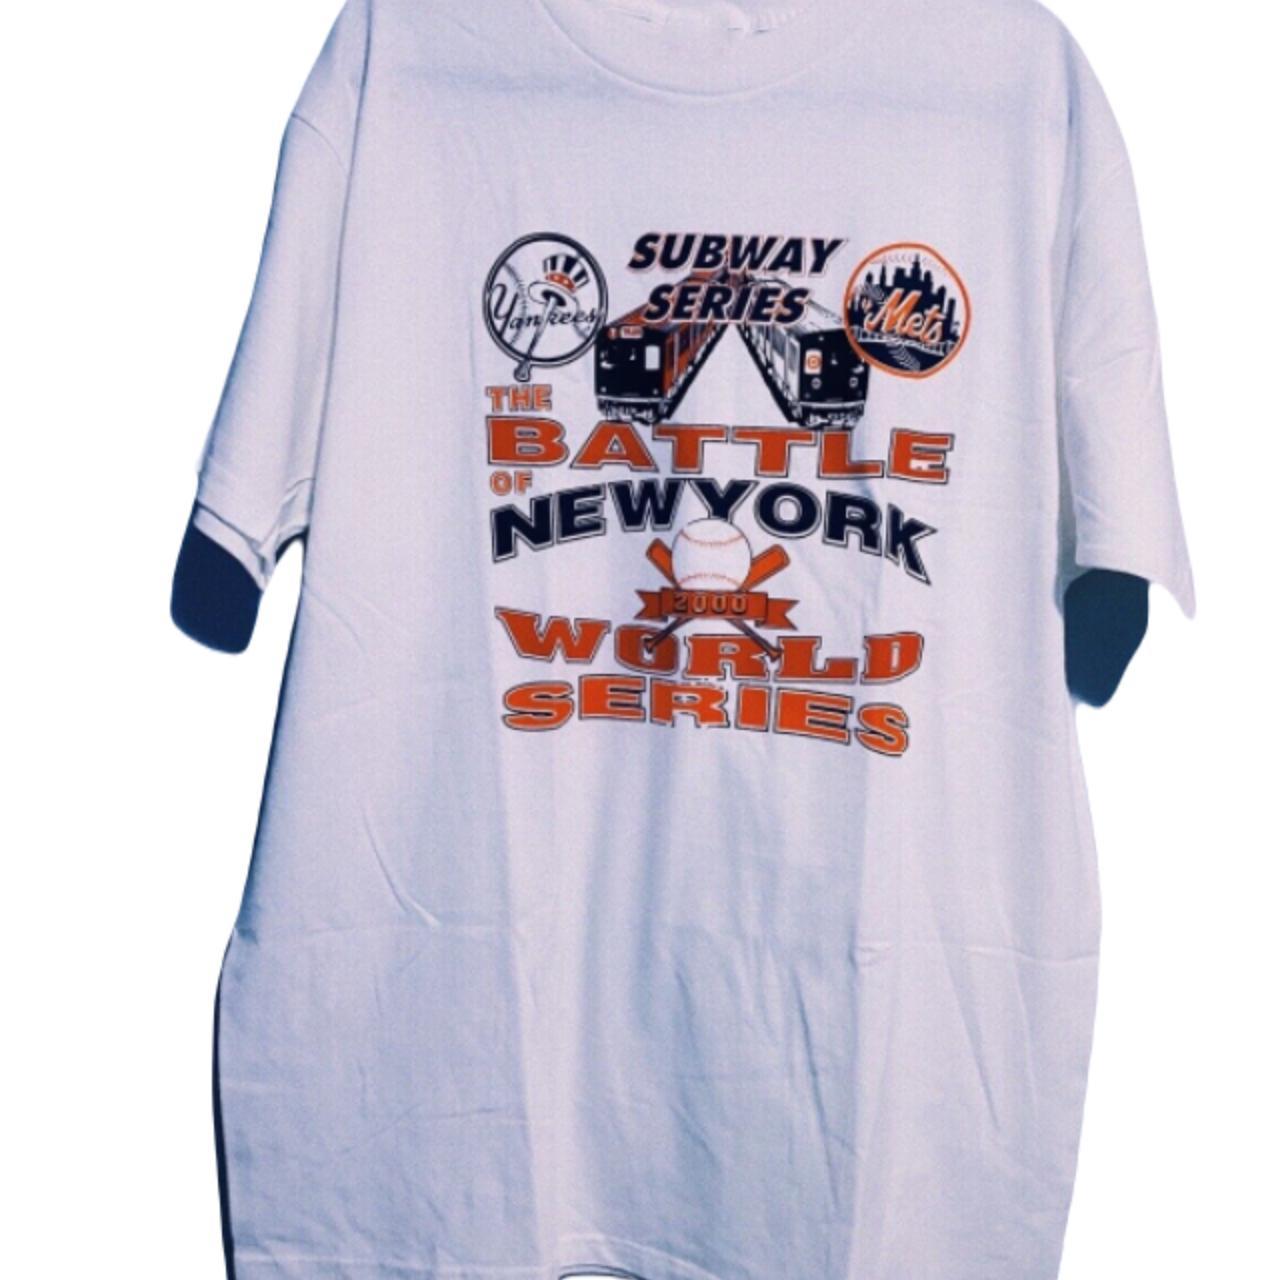 World Series 2000 T Shirt Battle of New York Yankees Mets 